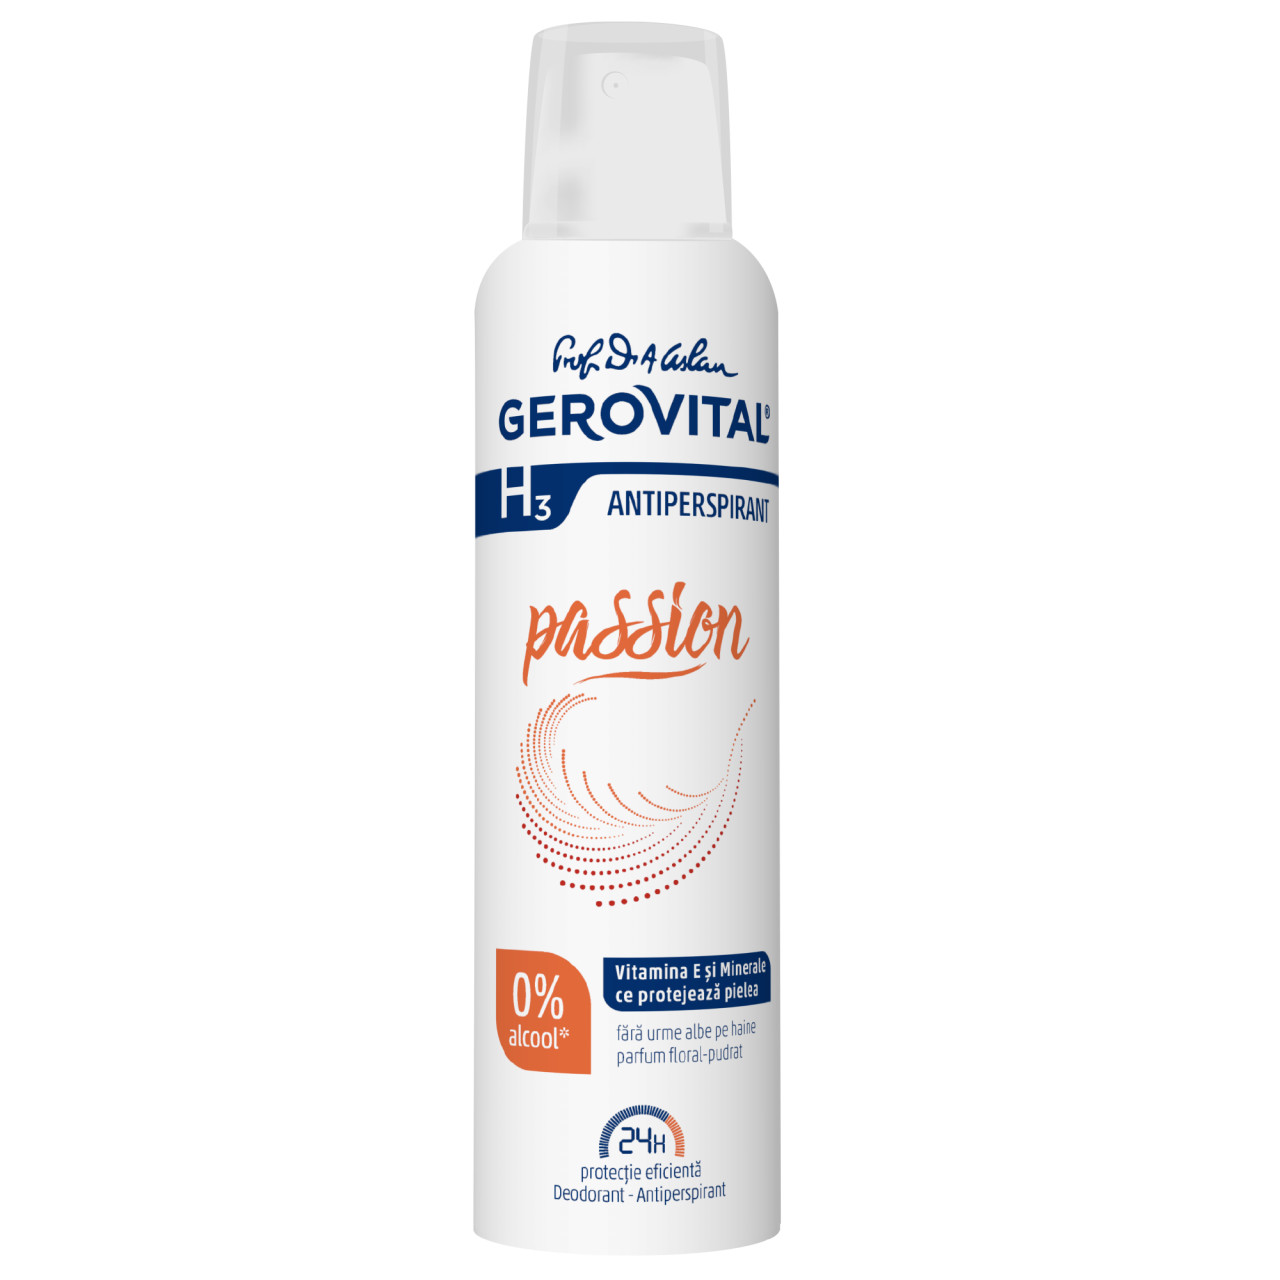 Gerovital H3 Deodorant Antiperspirant Passion - 150 ml